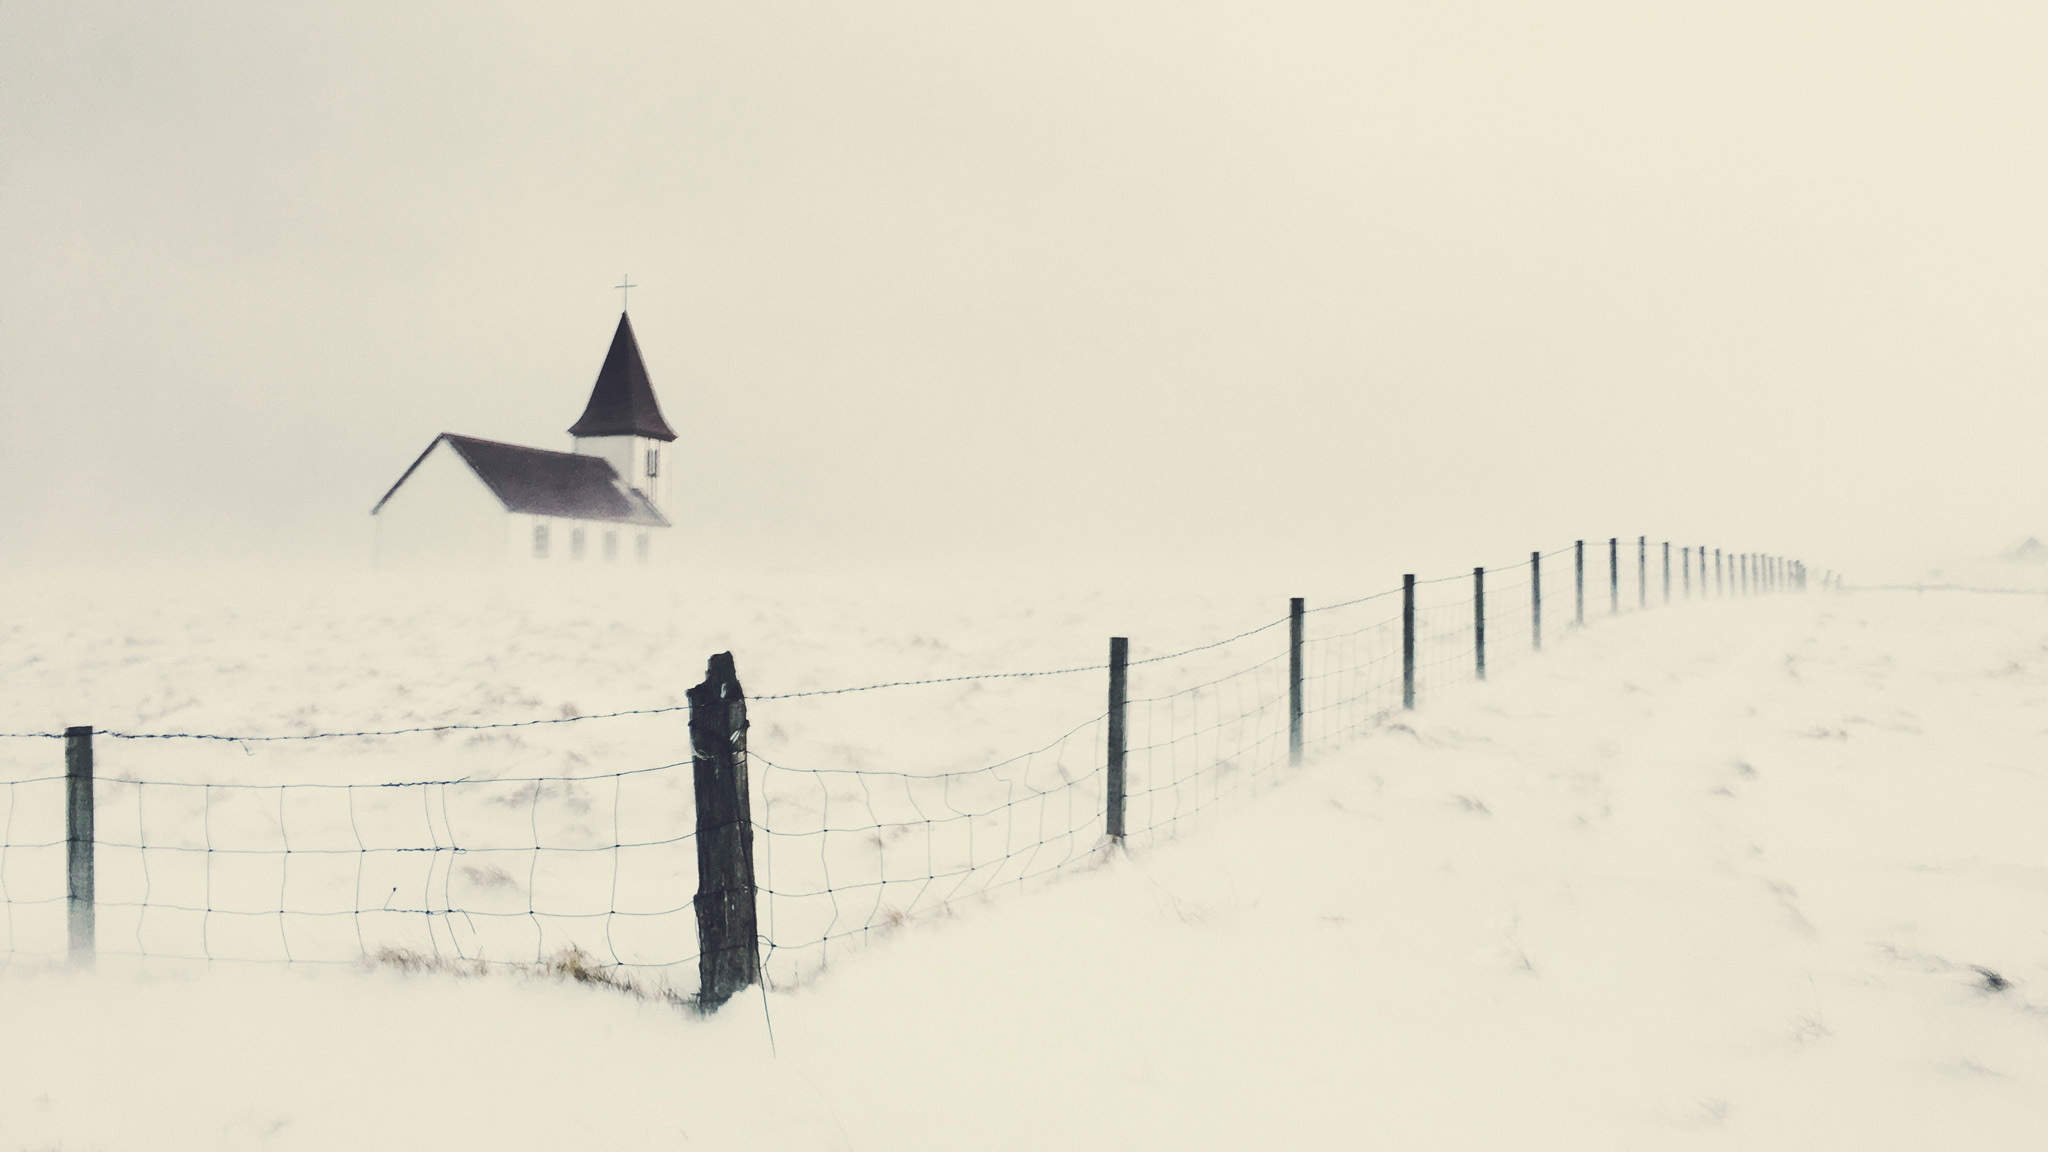 Church in a blizzard